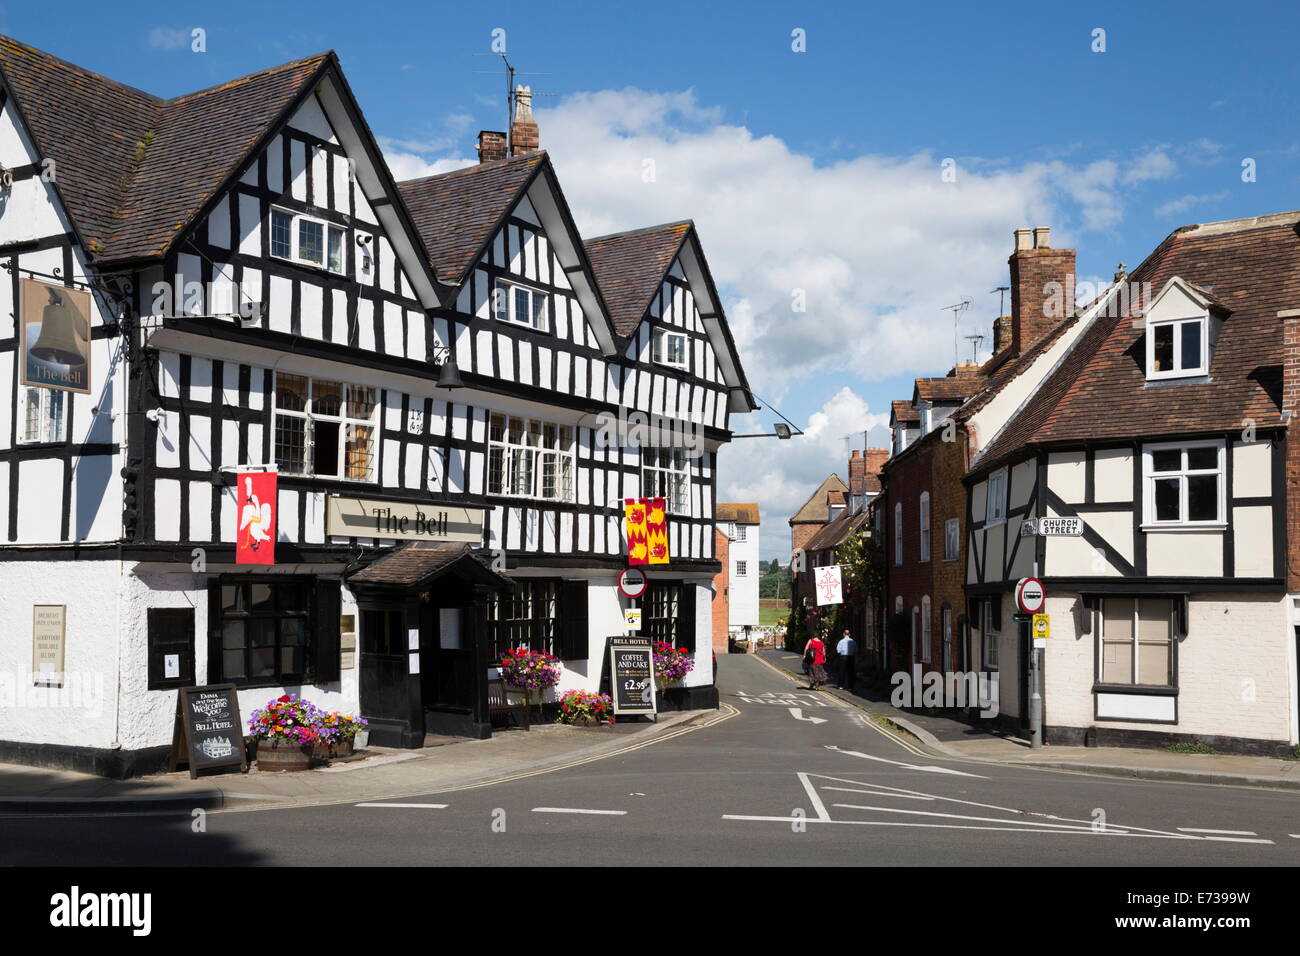 The Bell Pub on Church Street, Tewkesbury, Gloucestershire, England, United Kingdom, Europe Stock Photo